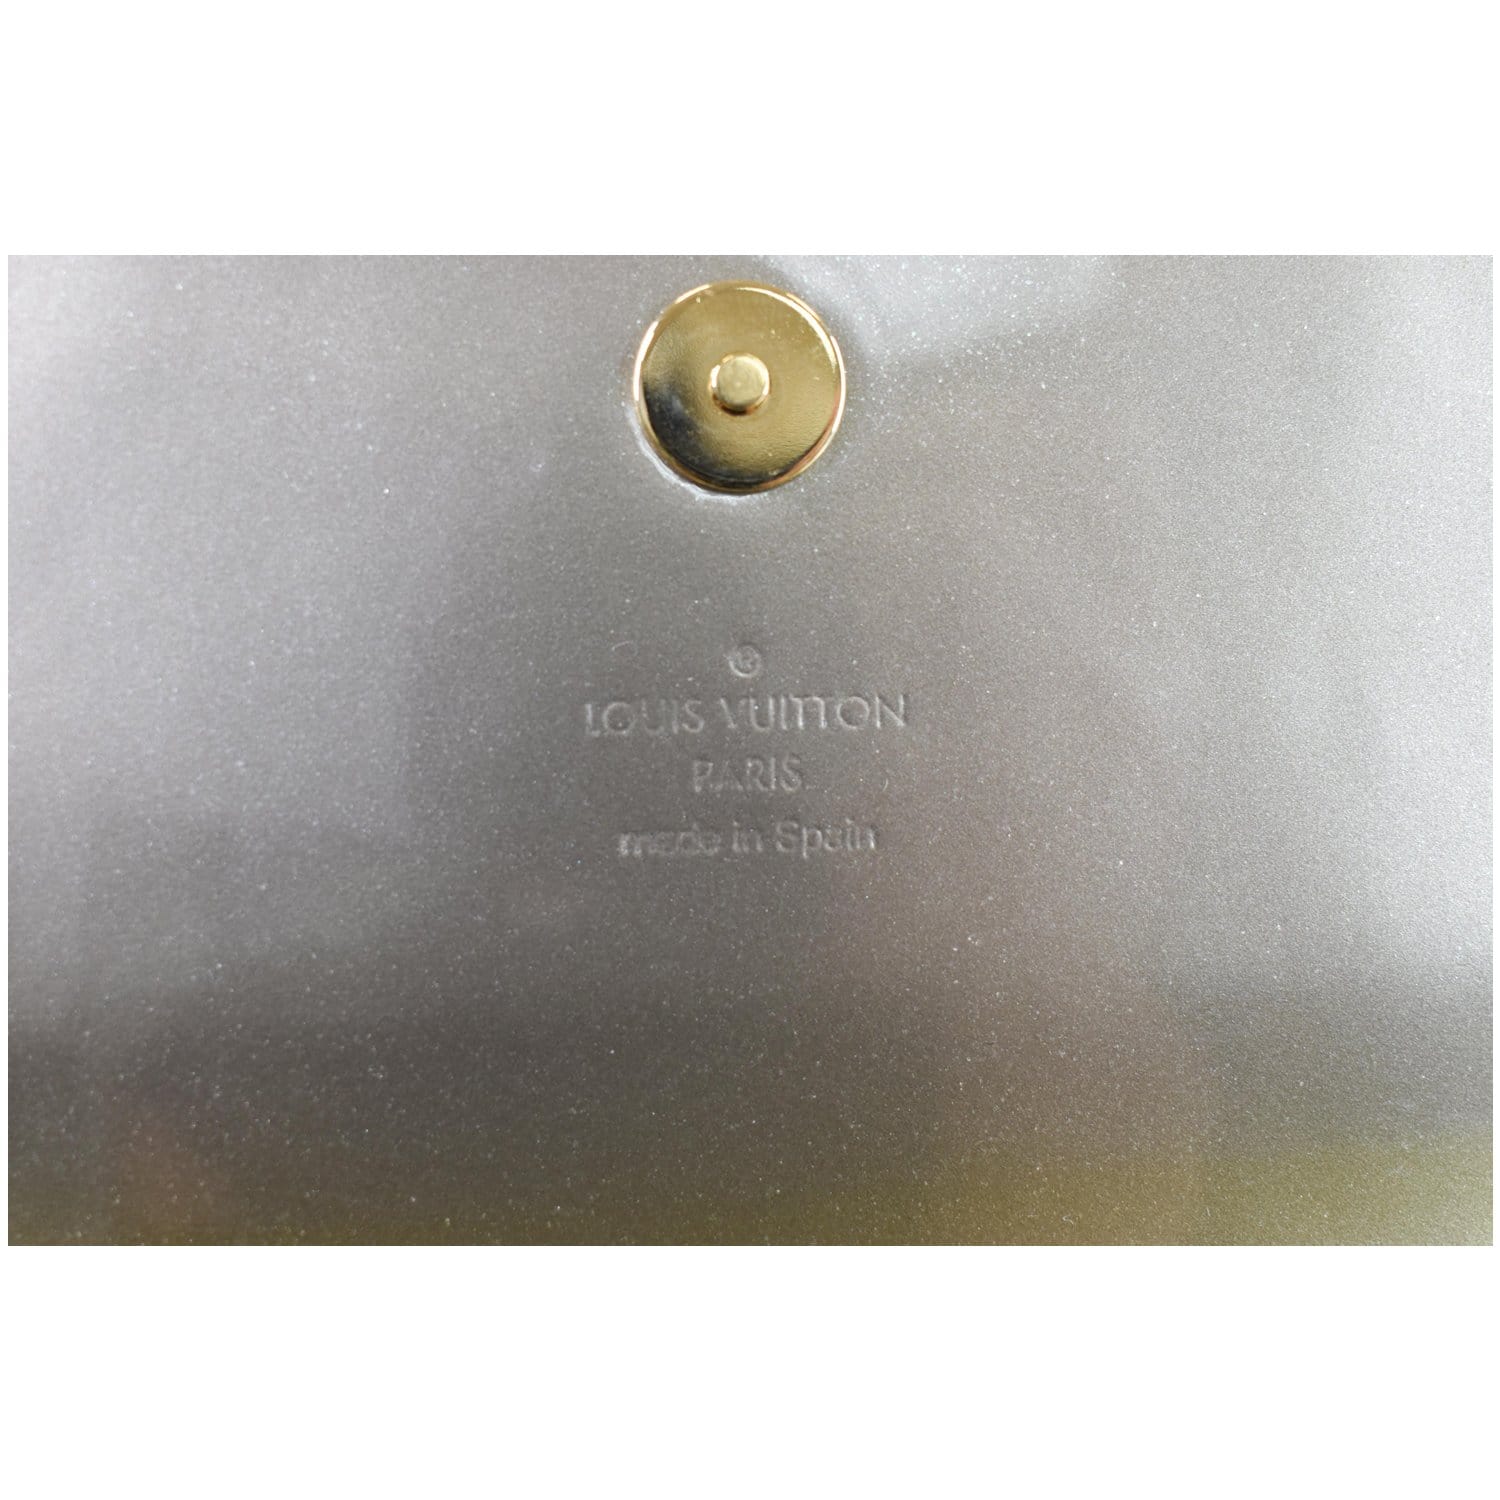 Sold at Auction: Louis Vuitton Amarante Vernis Leather Sobe Clutch